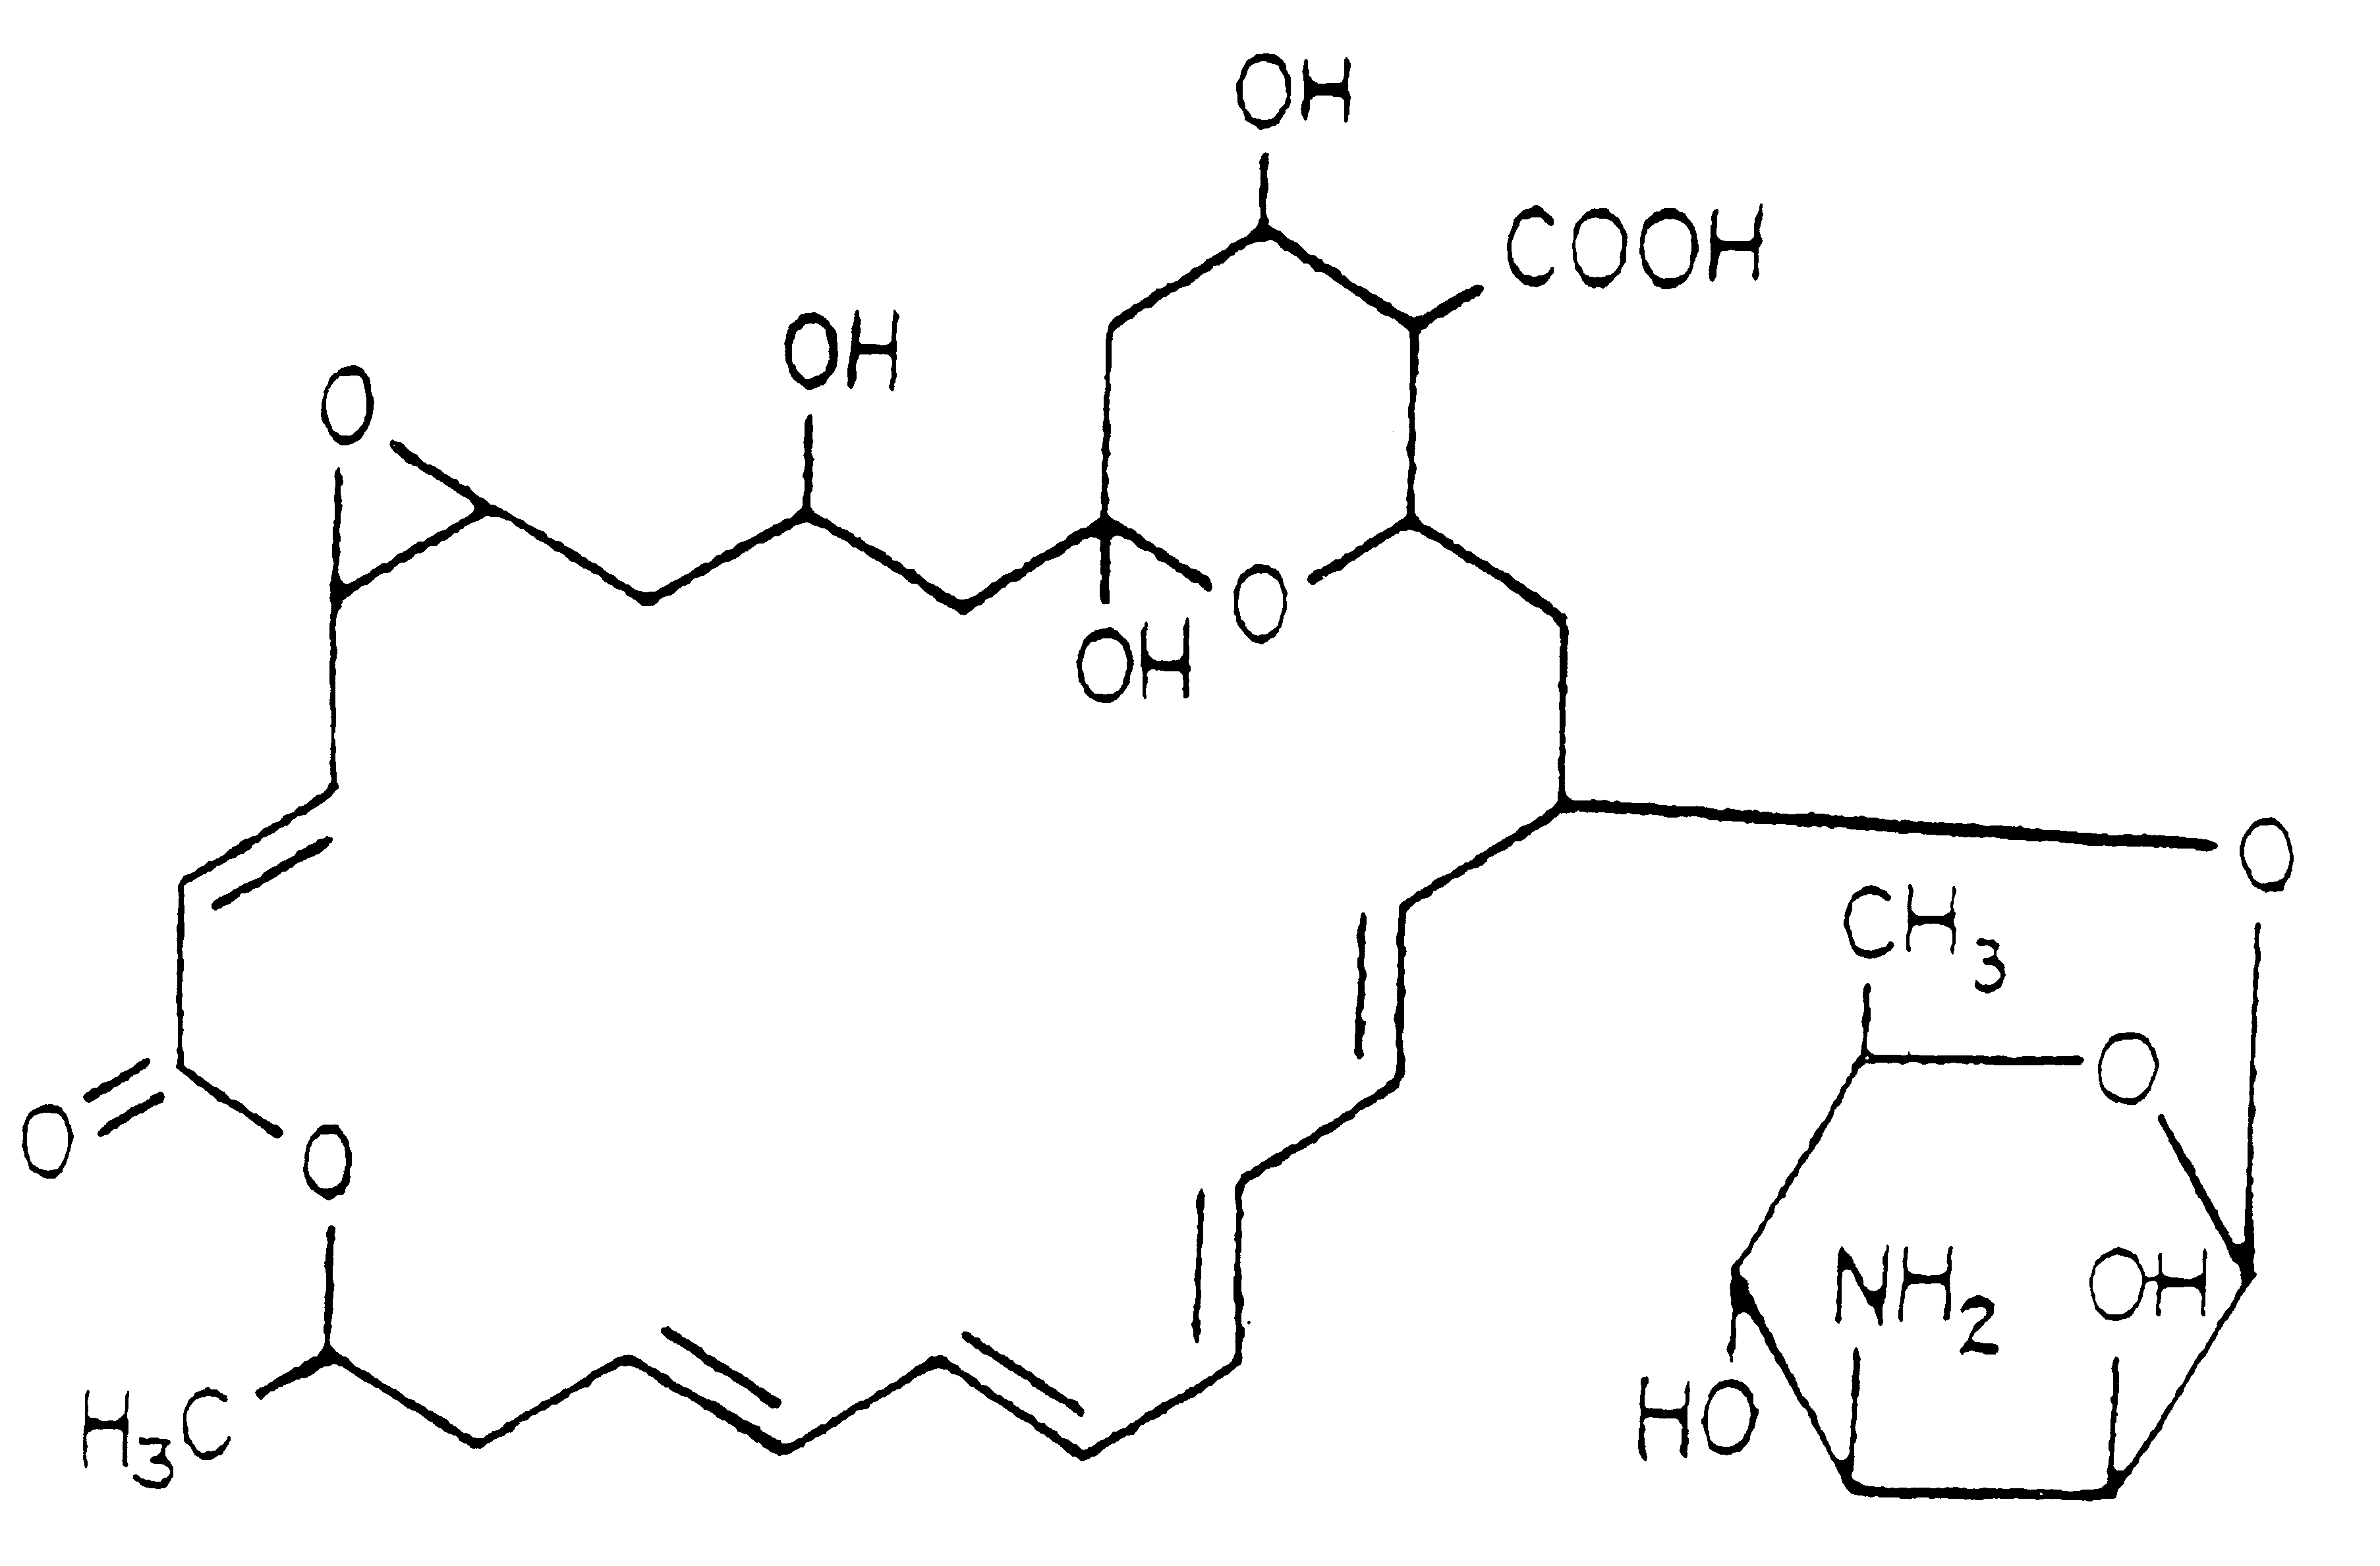 Topical formulations of natamycin/pimaricin